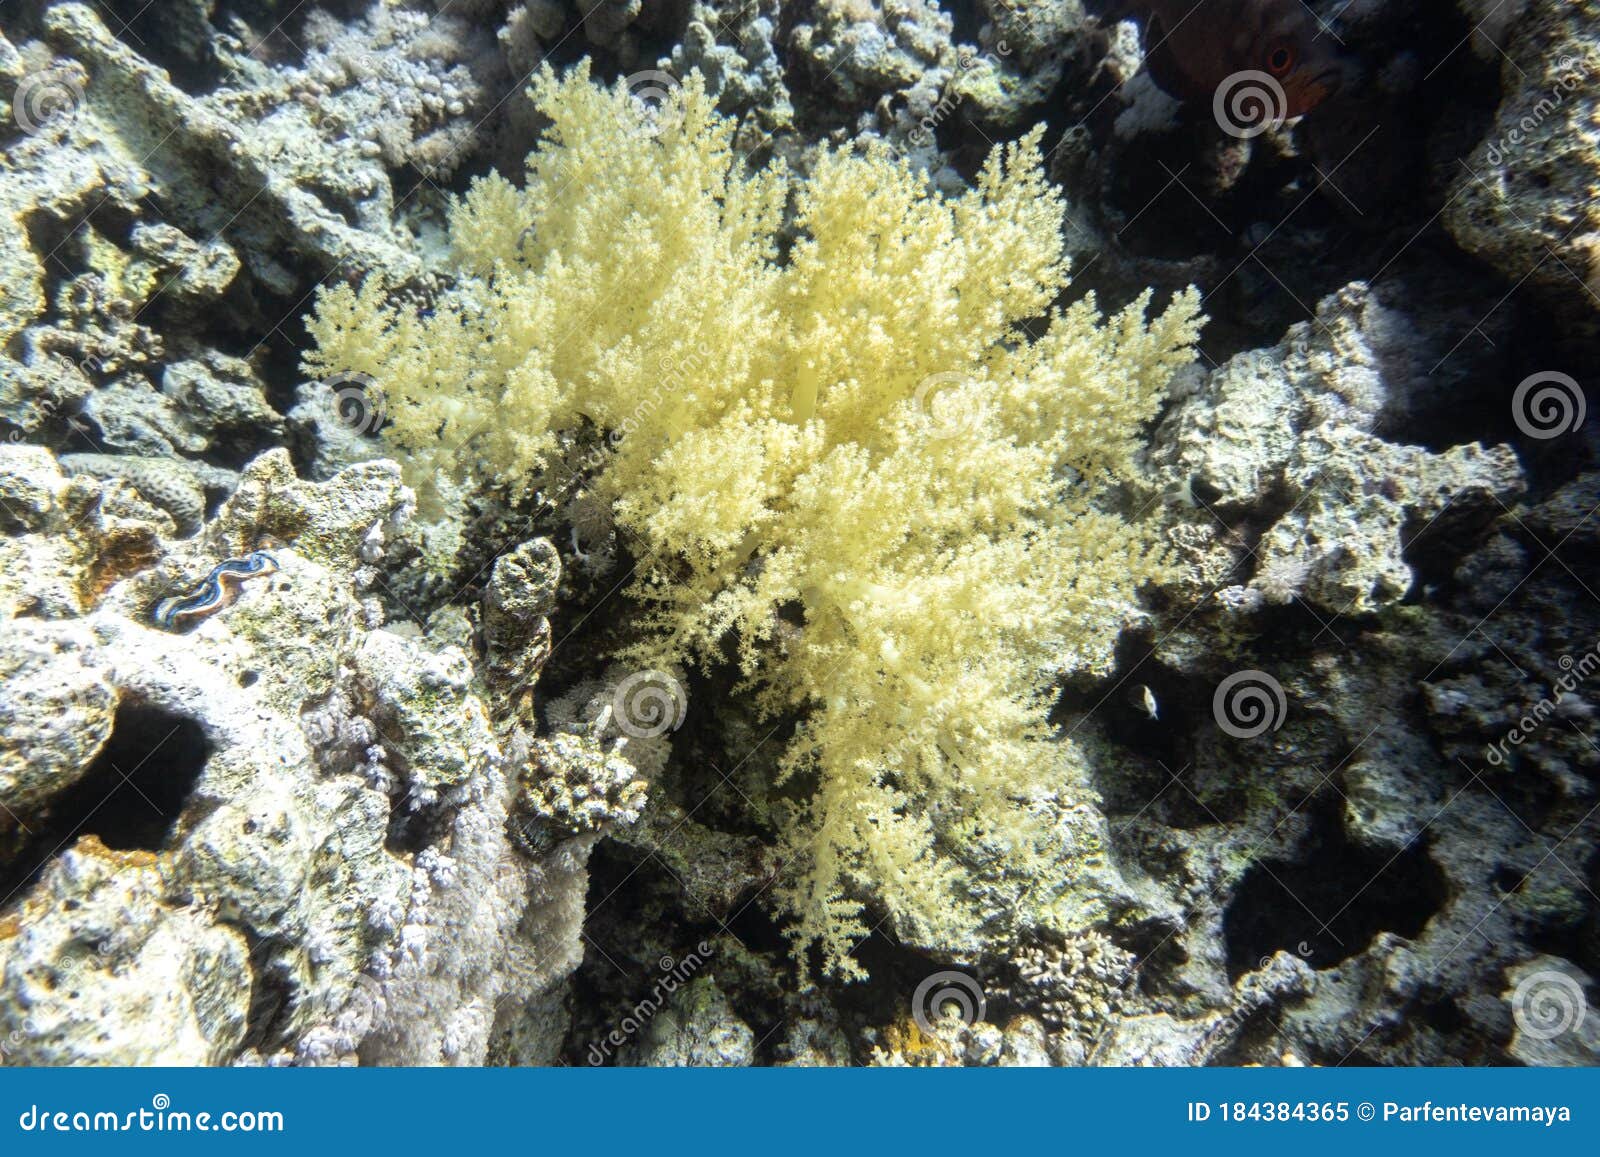 Branches of Deep Sea Coral Polyps, Marine Life on a Ocean Floor